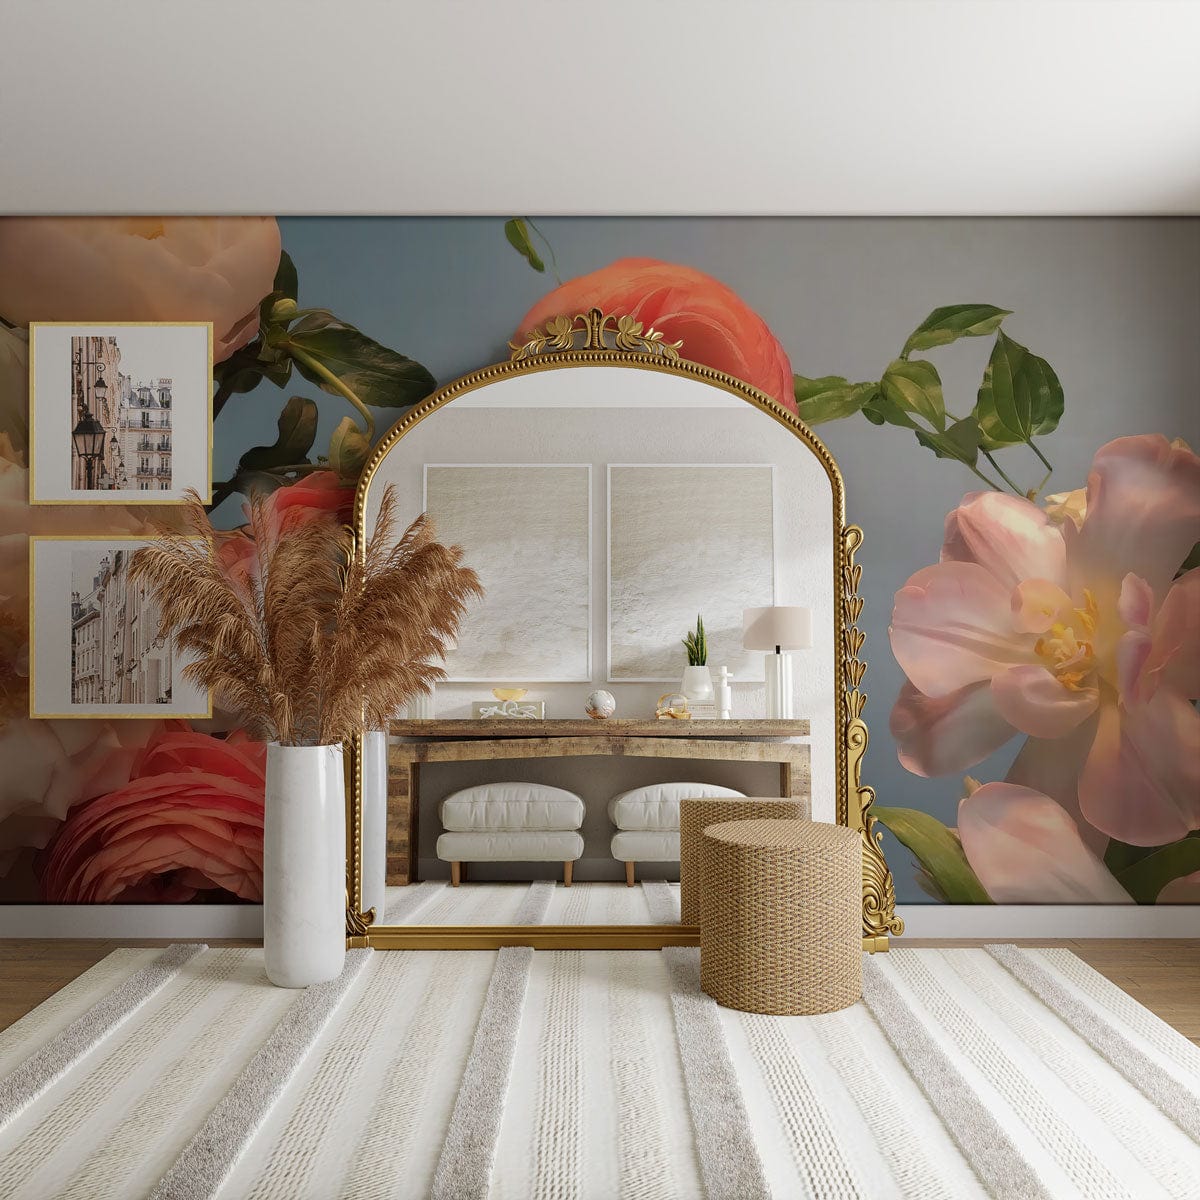 Ranunculus Asiaticus Dream Wall Mural Stunning Home Interior Design